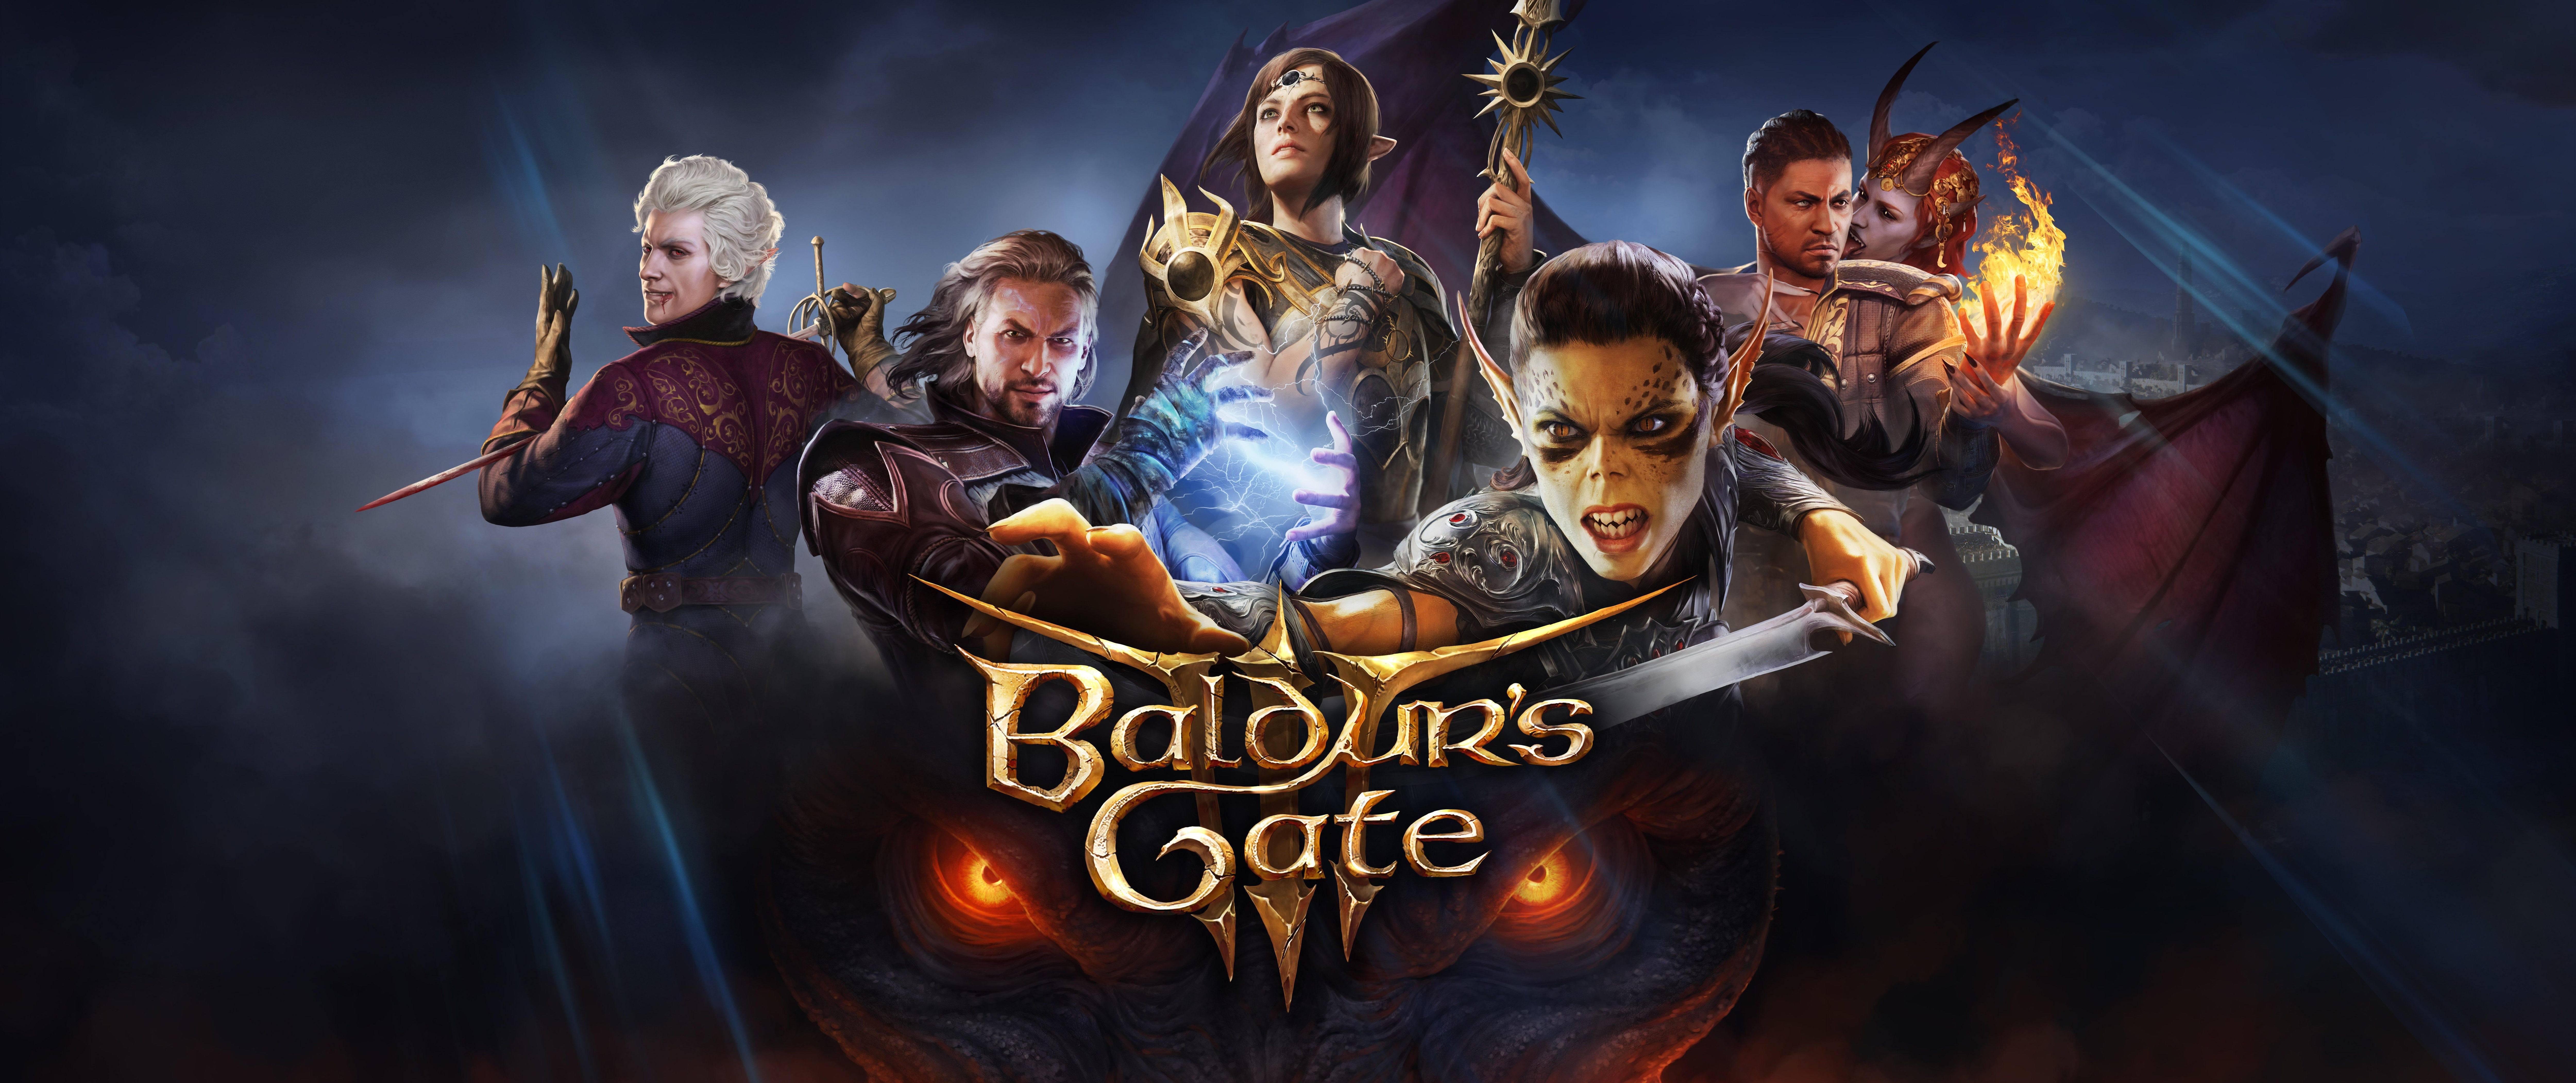 Baldur's Gate 3 New Key Art Horizontal Ver